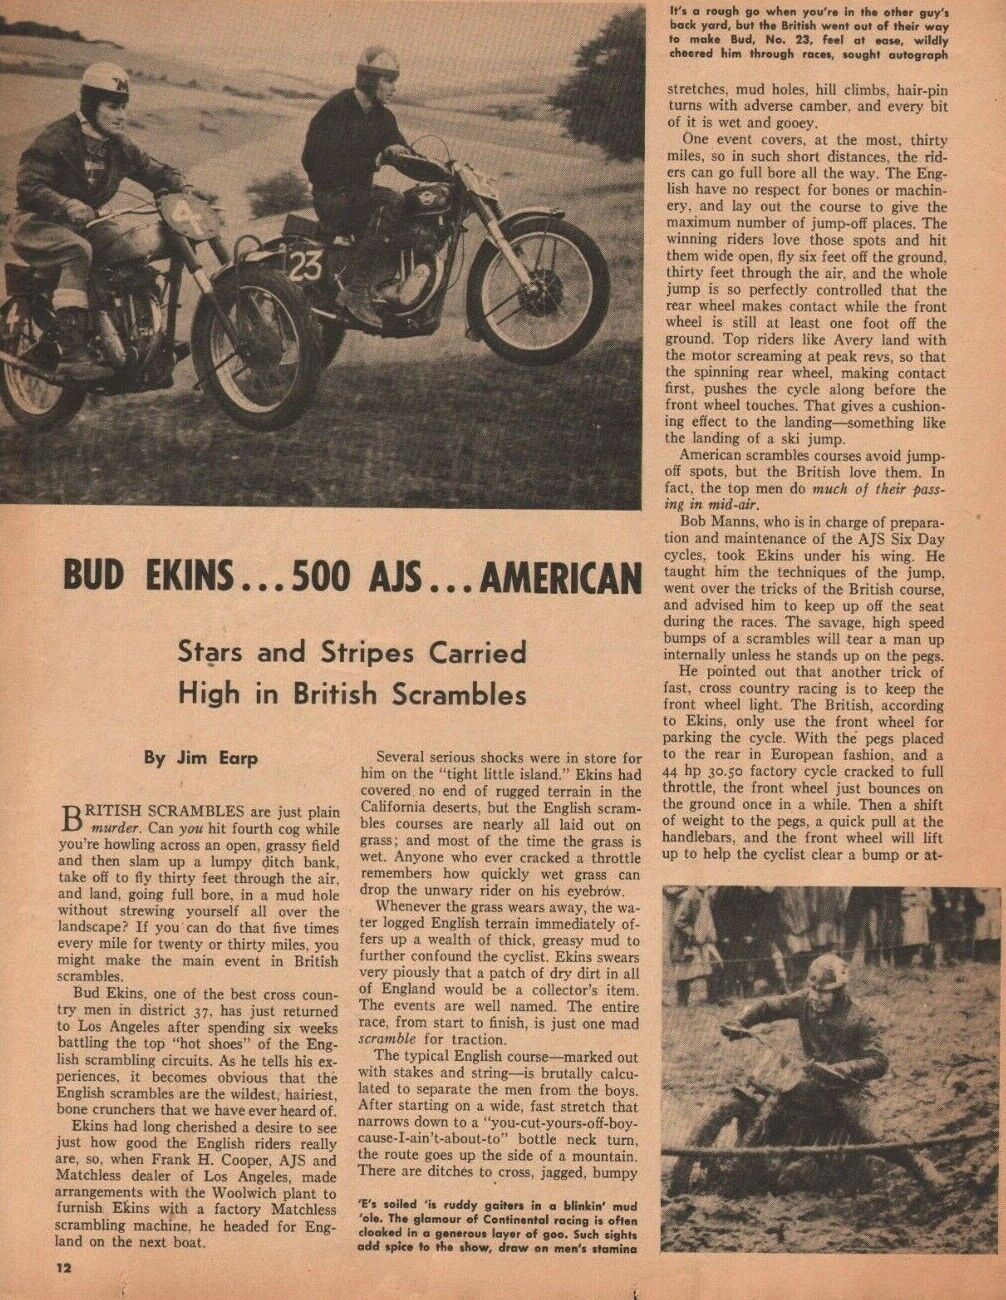 1952 Bud Ekins, 500 AJS, British Scrambles - 2-Page Vintage Motorcycle Article